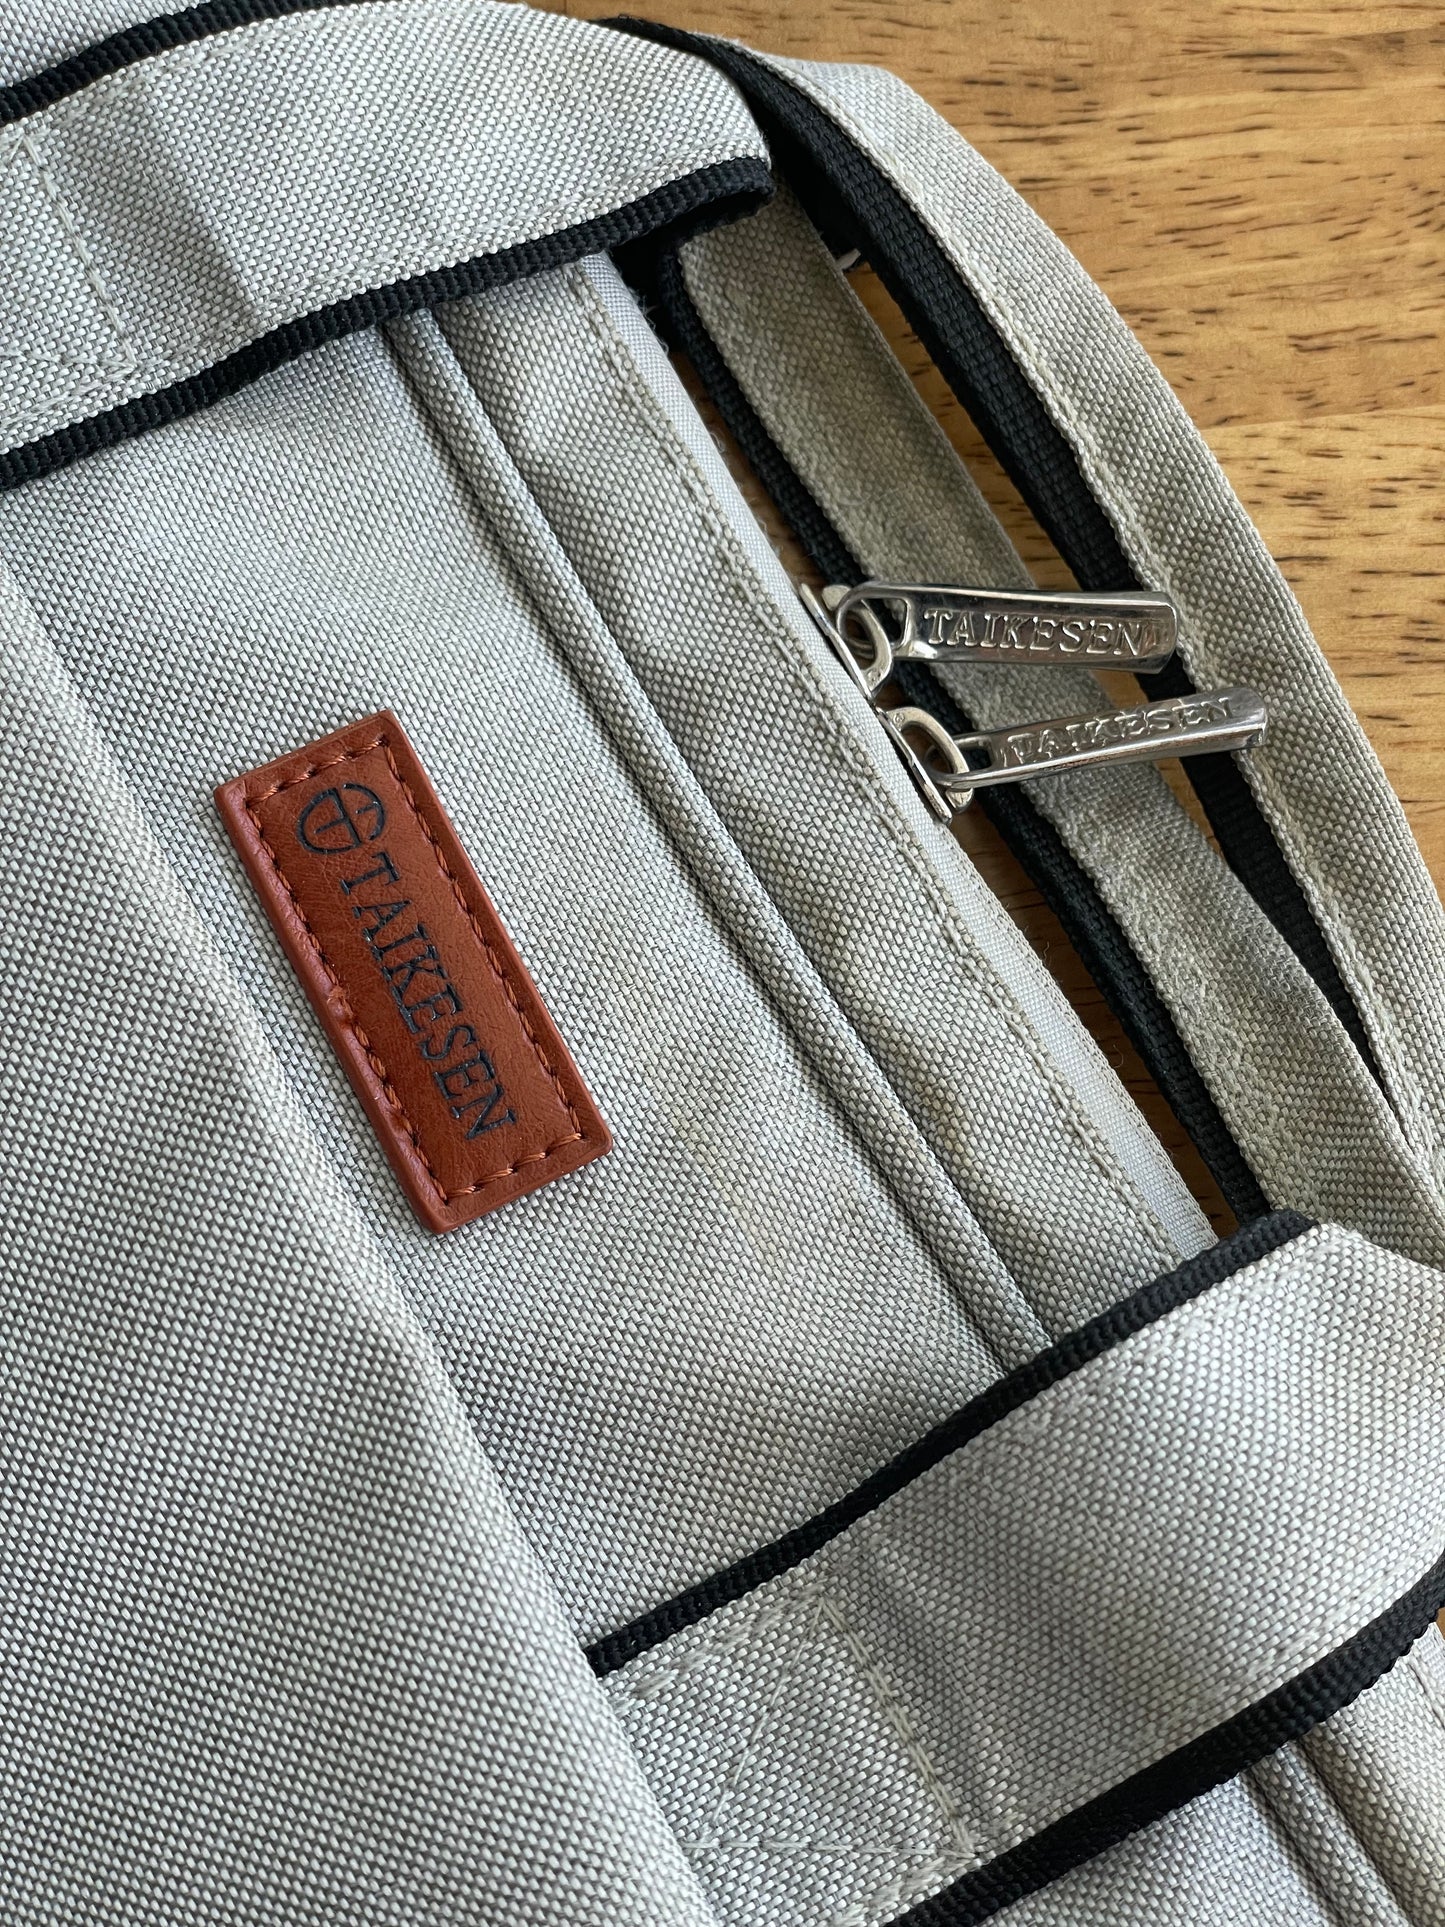 Taikesen Laptop Bag ~ Broken Zipper